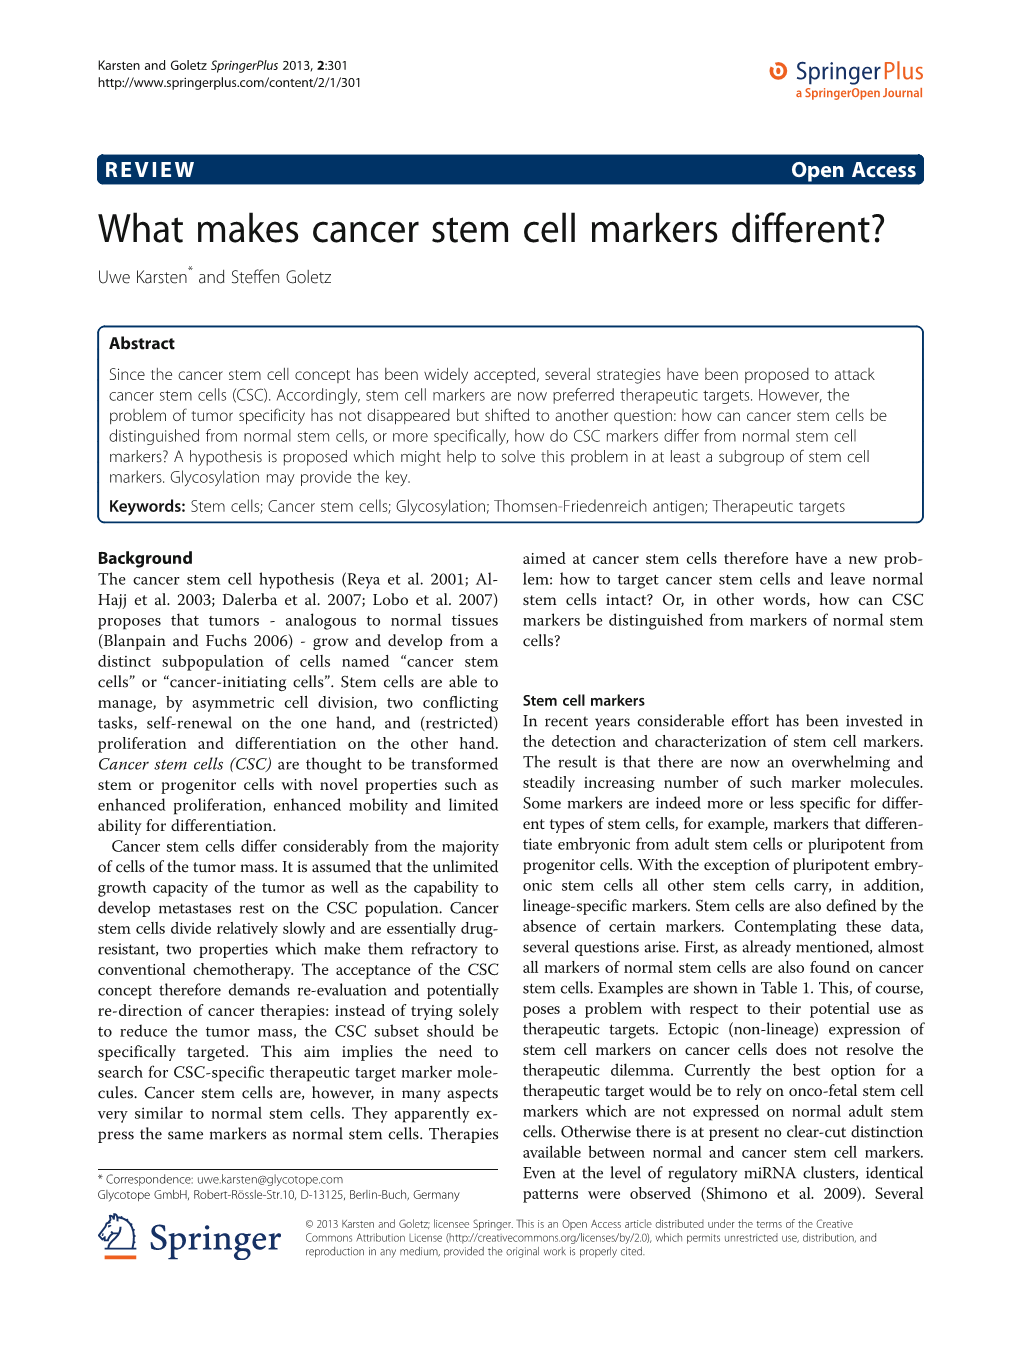 What Makes Cancer Stem Cell Markers Different? Uwe Karsten* and Steffen Goletz